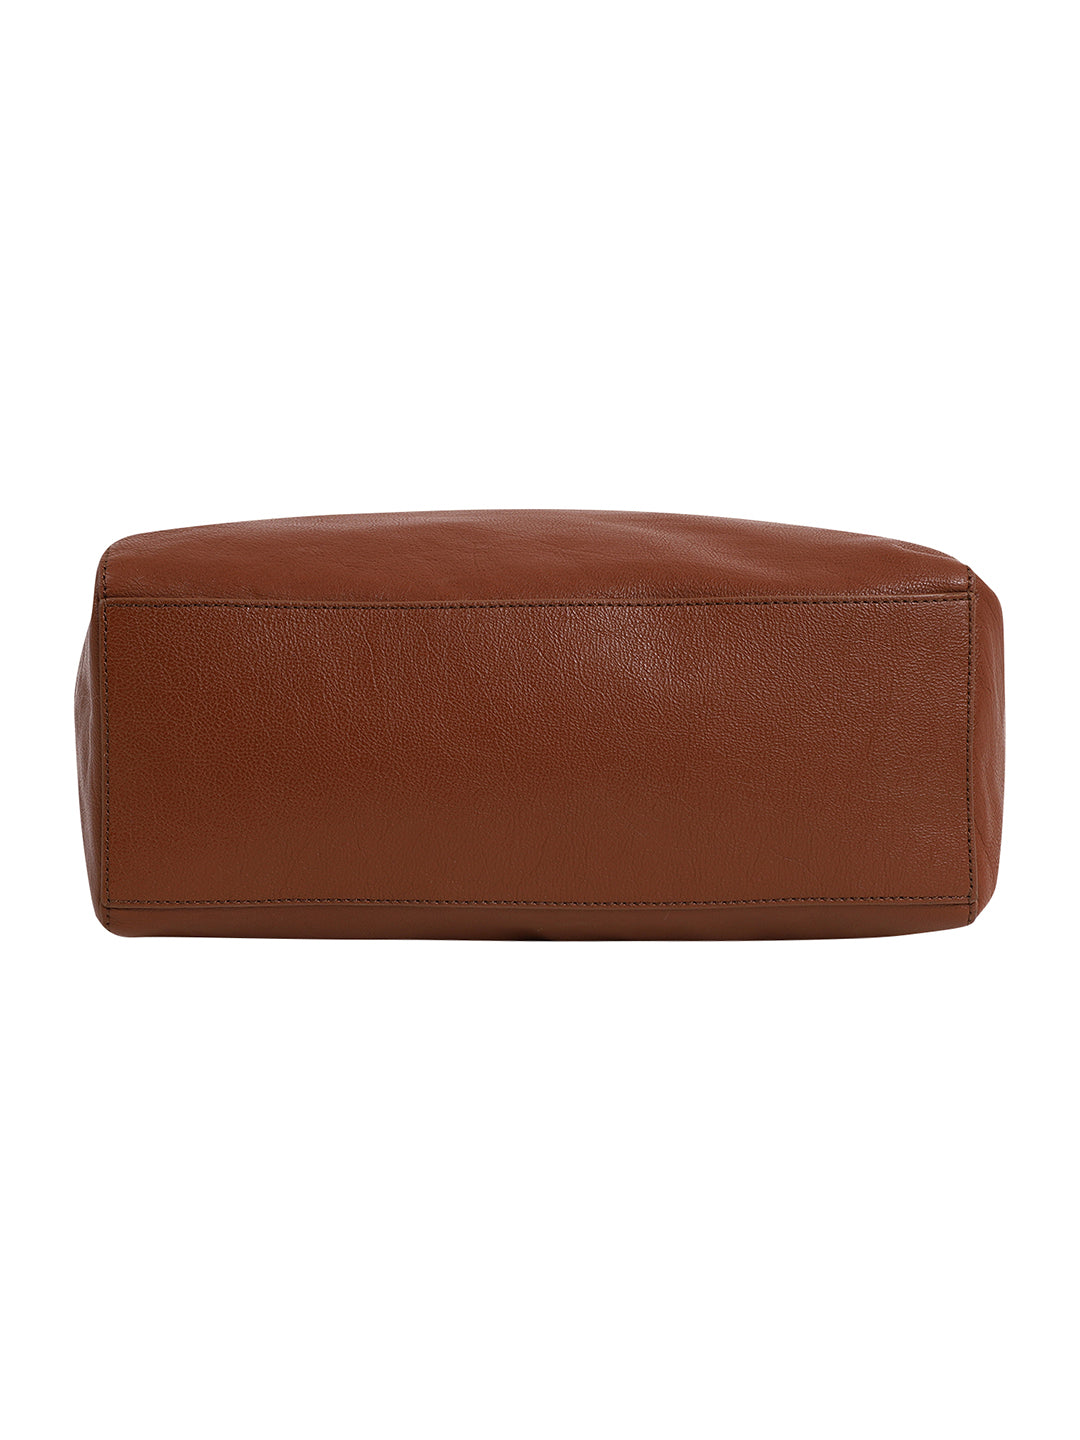 Veneto Cognac Leather Tote Bag